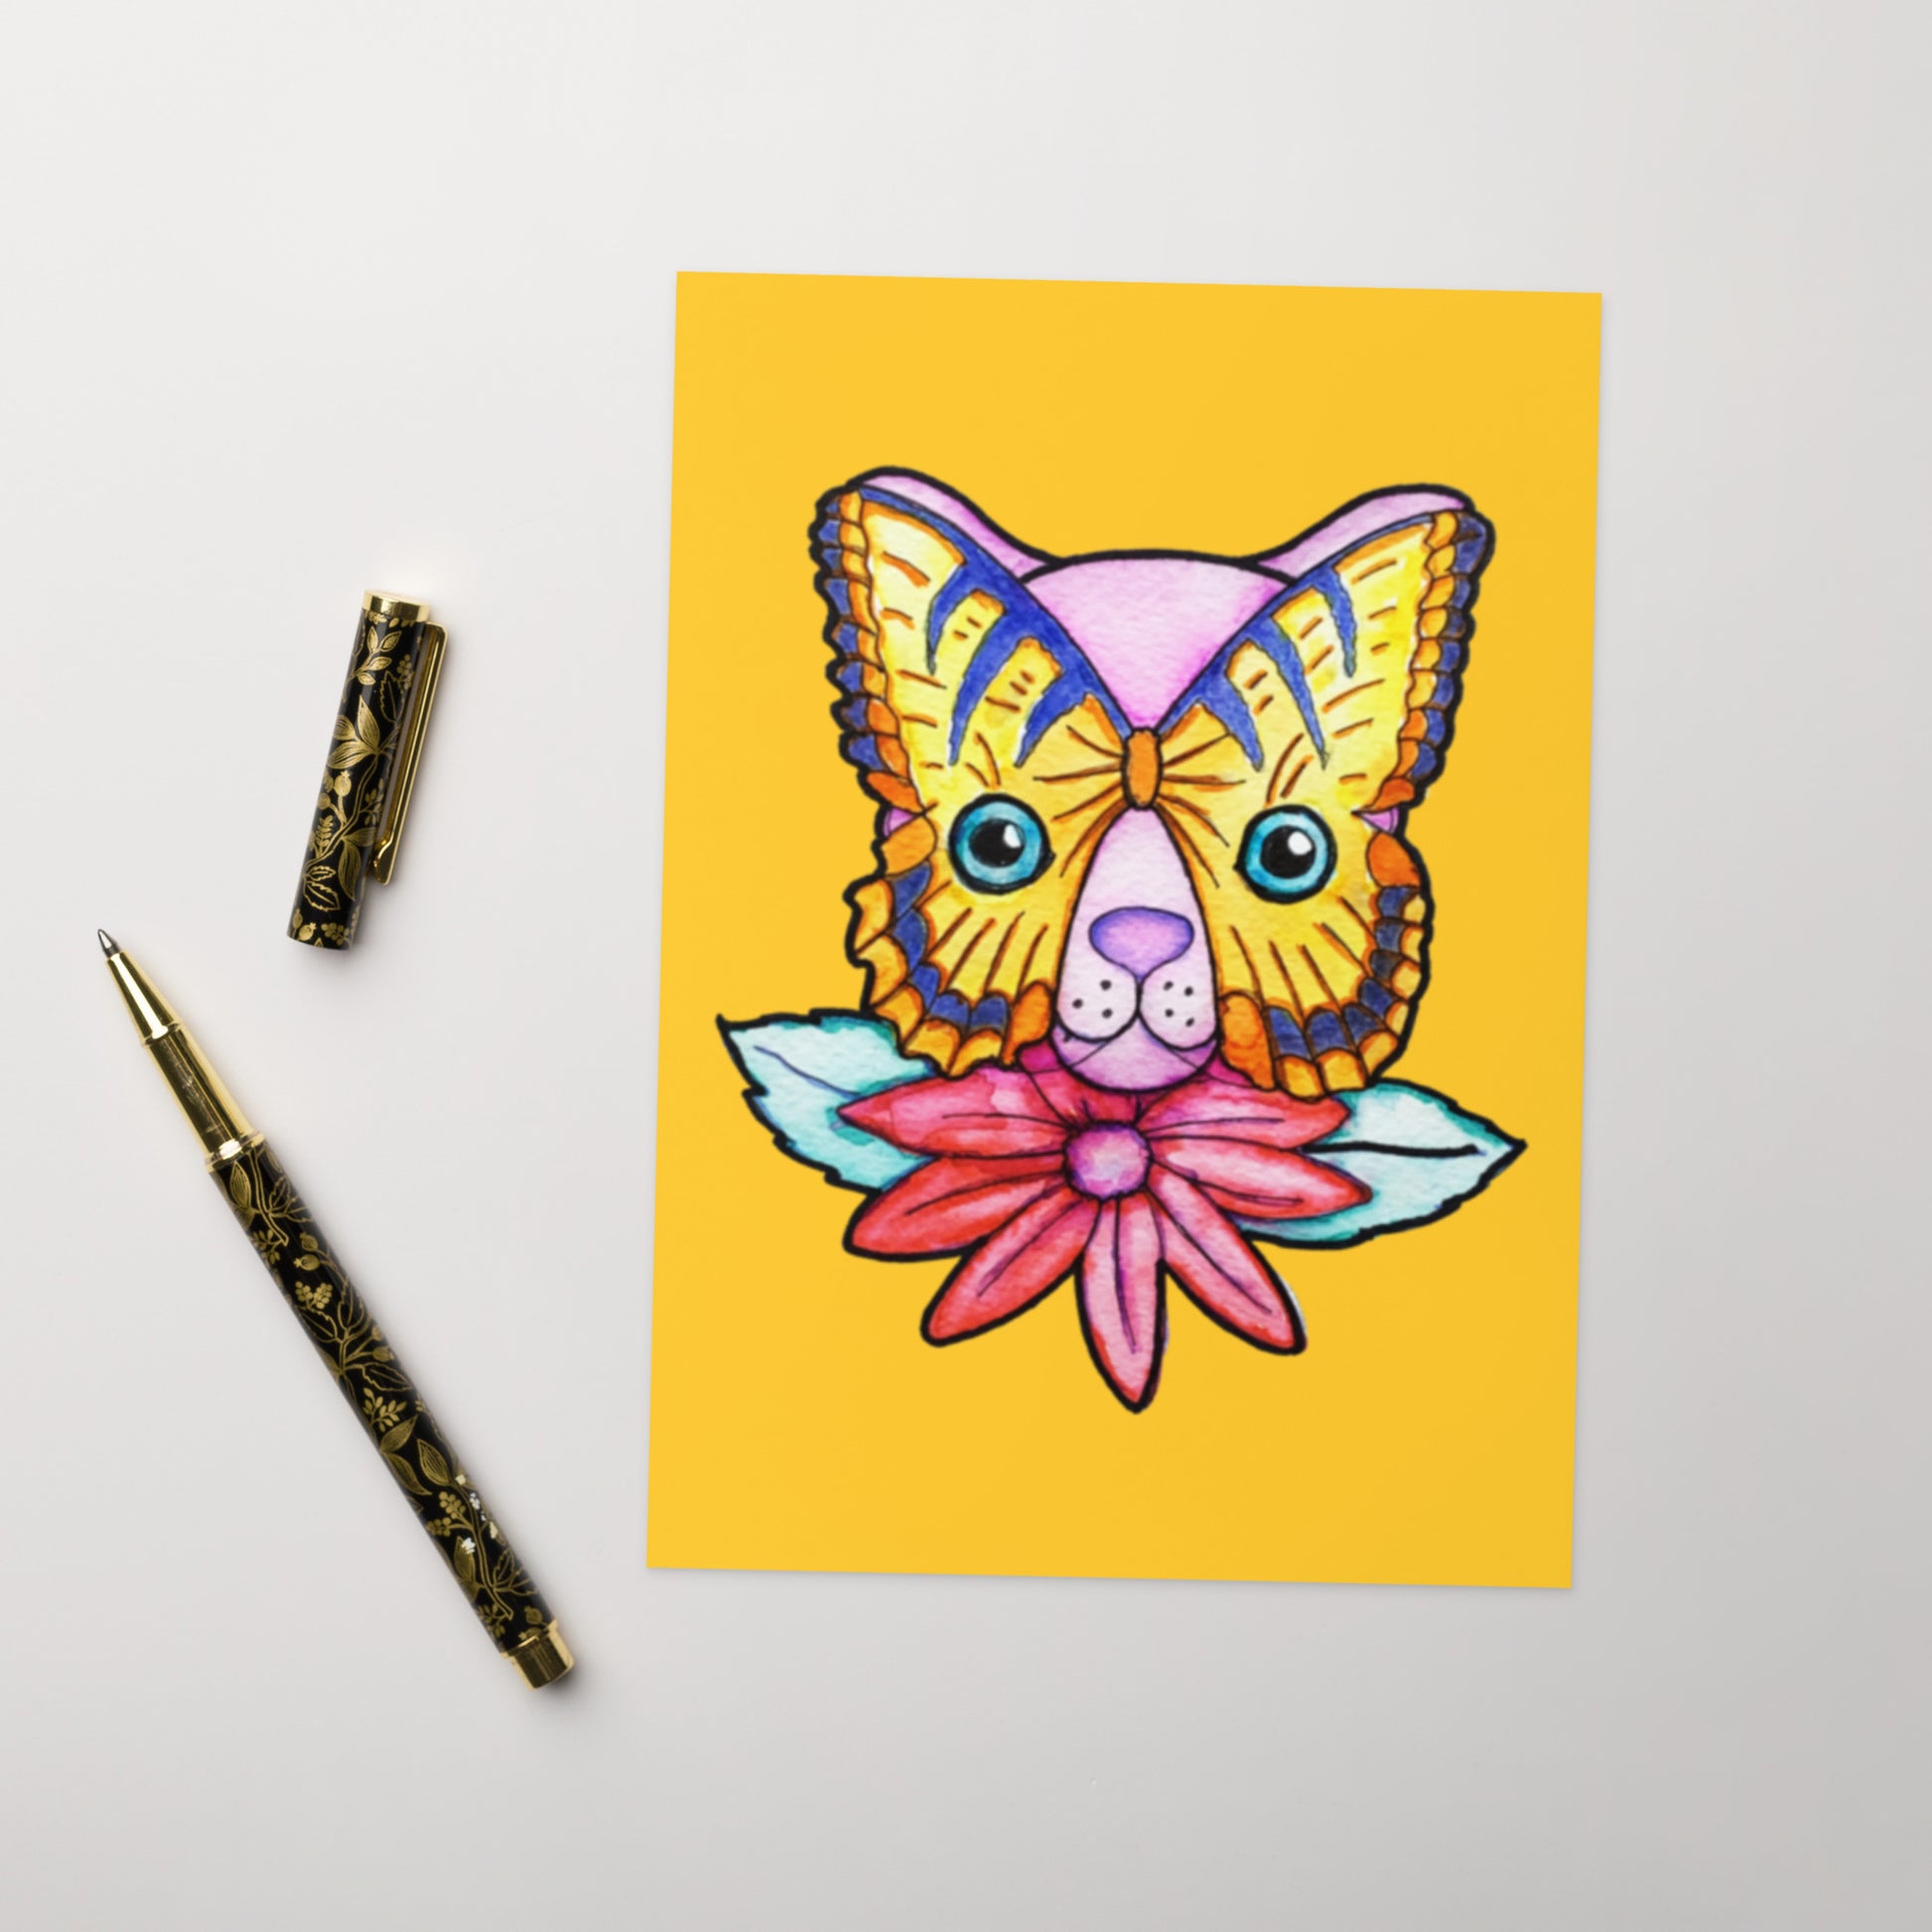 Kitty Cat Flower Greeting card - Art Love Decor